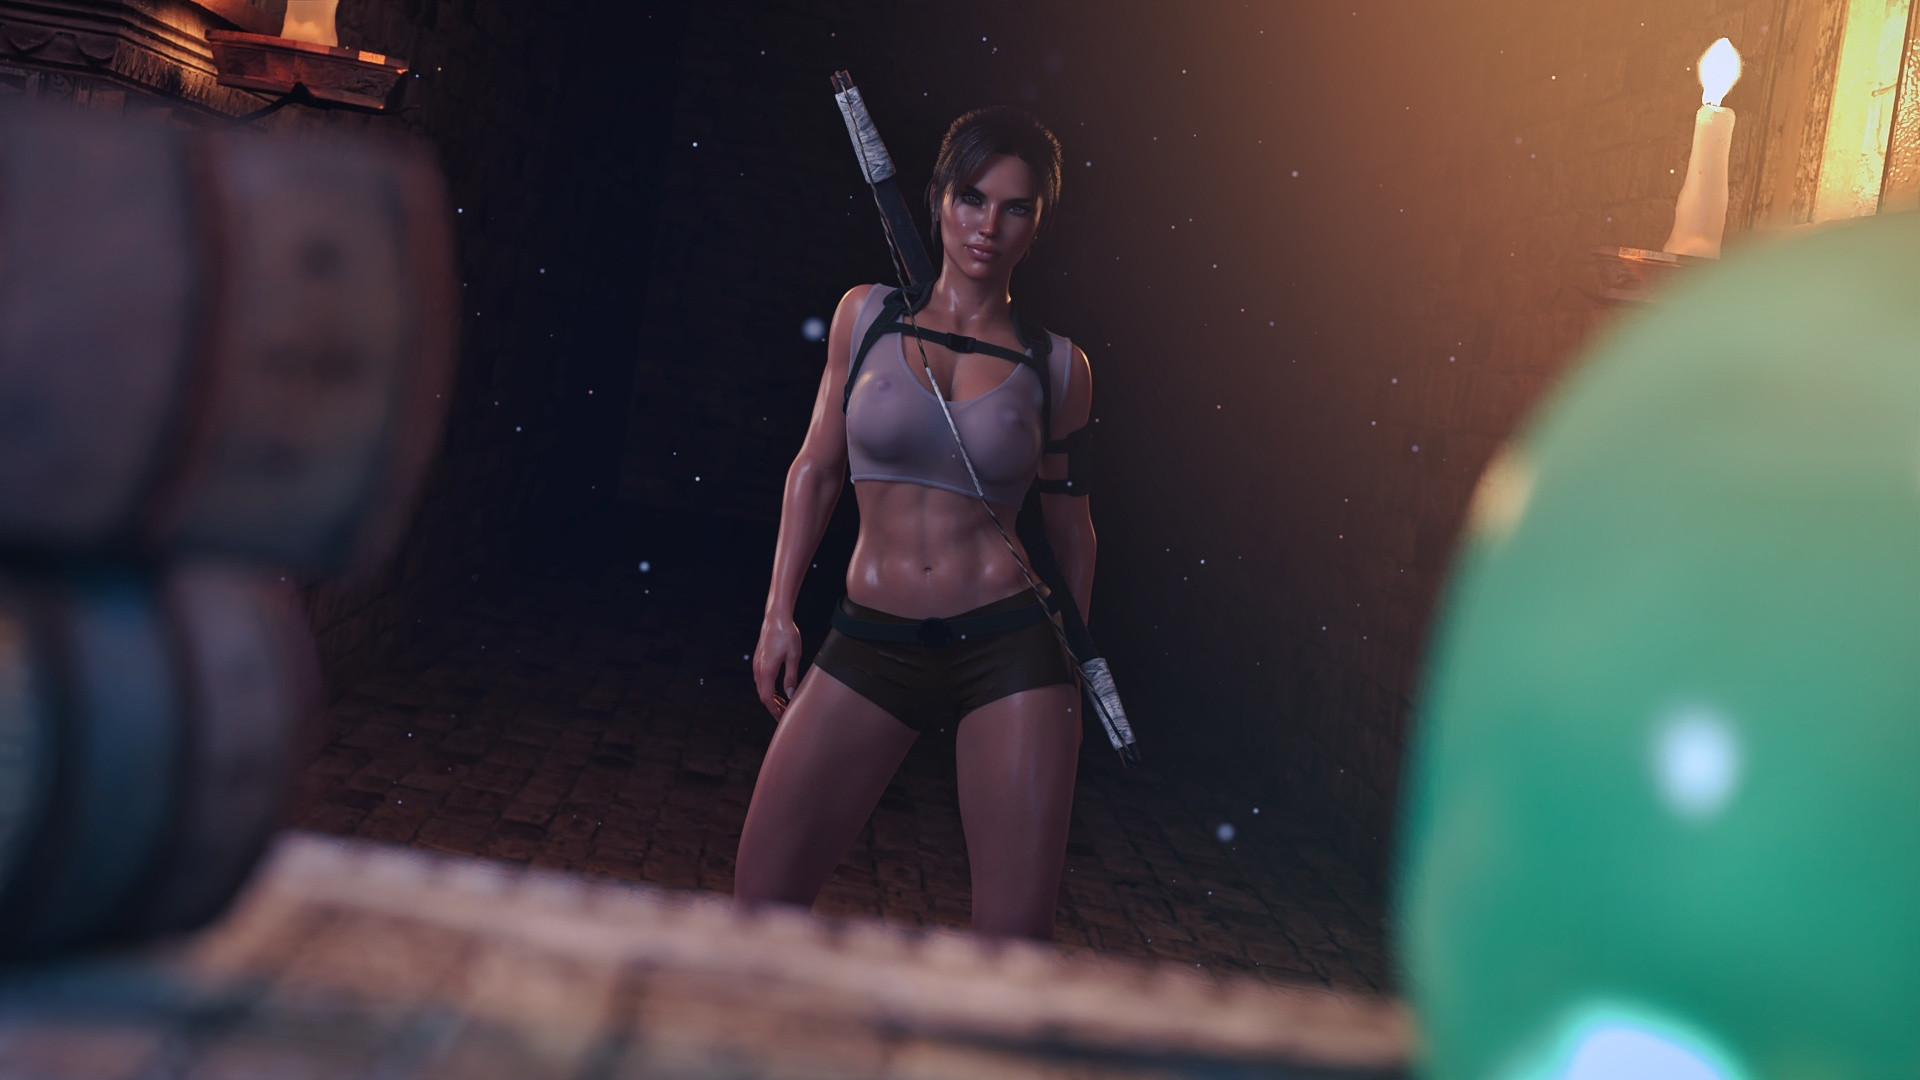 [Forged3DX] Lara and the Jade Skull - 5